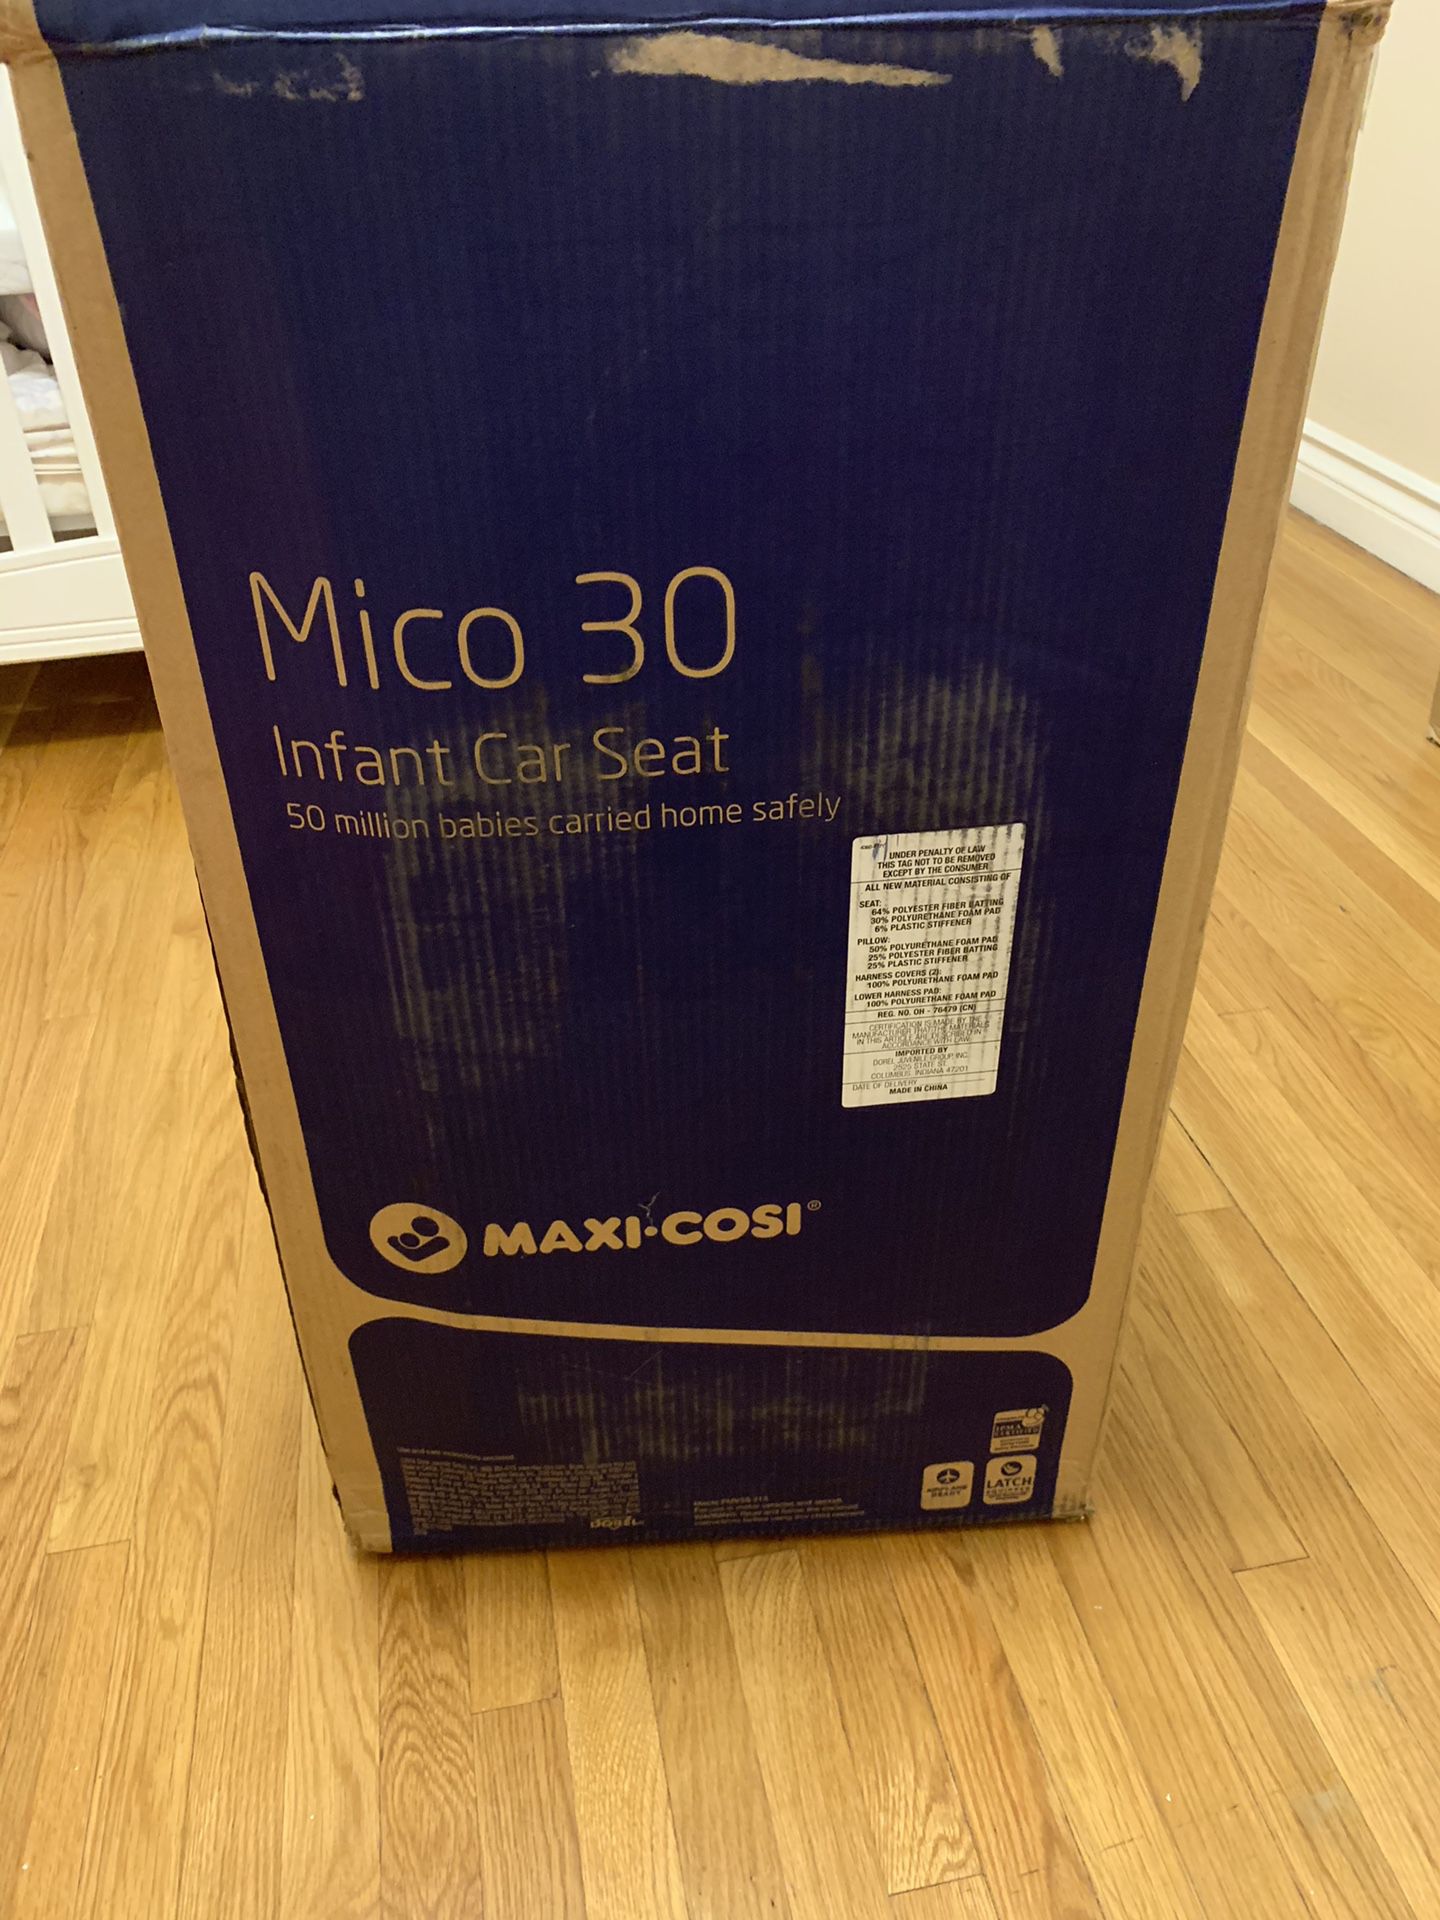 Maxi Cosi Mico 30 infant car seat (New in box!)